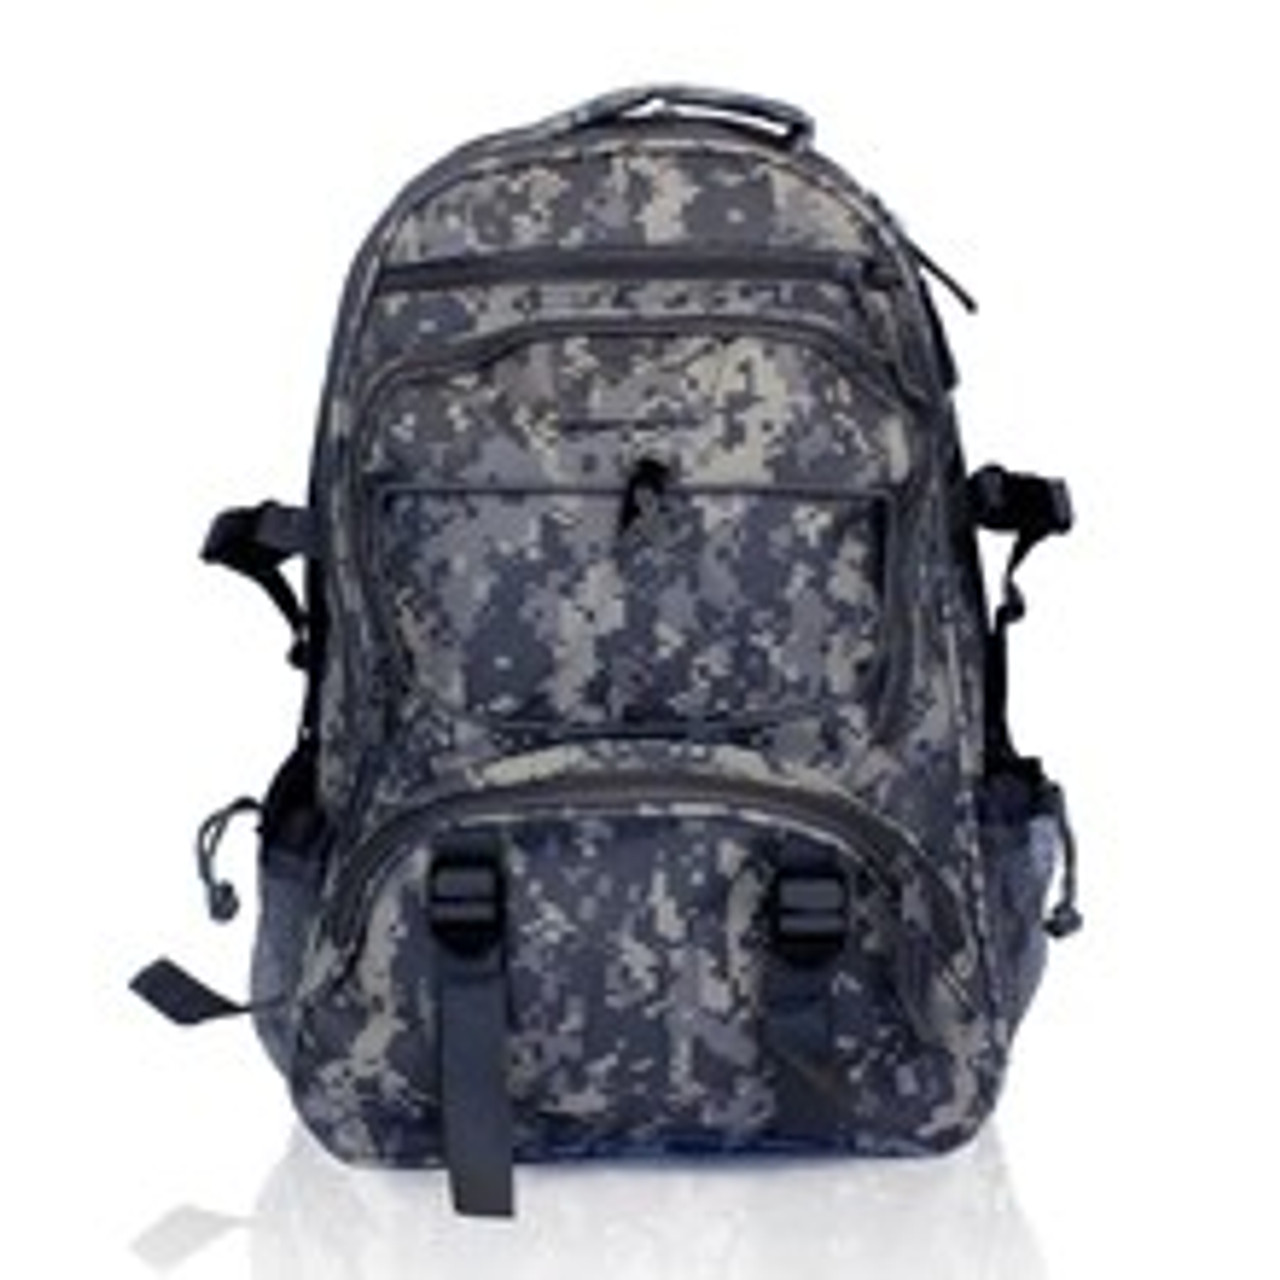 1 Person Elite Survival Kit w/ Multi-Pocket Hikers Backpack